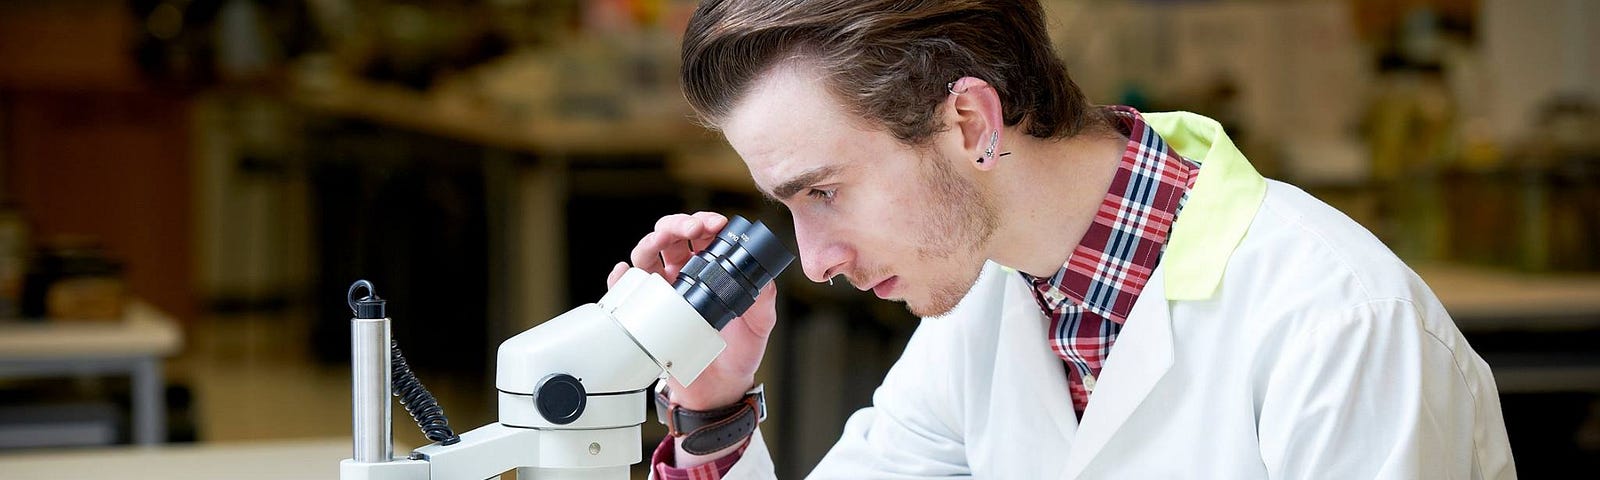 Gerard looking through a microscope